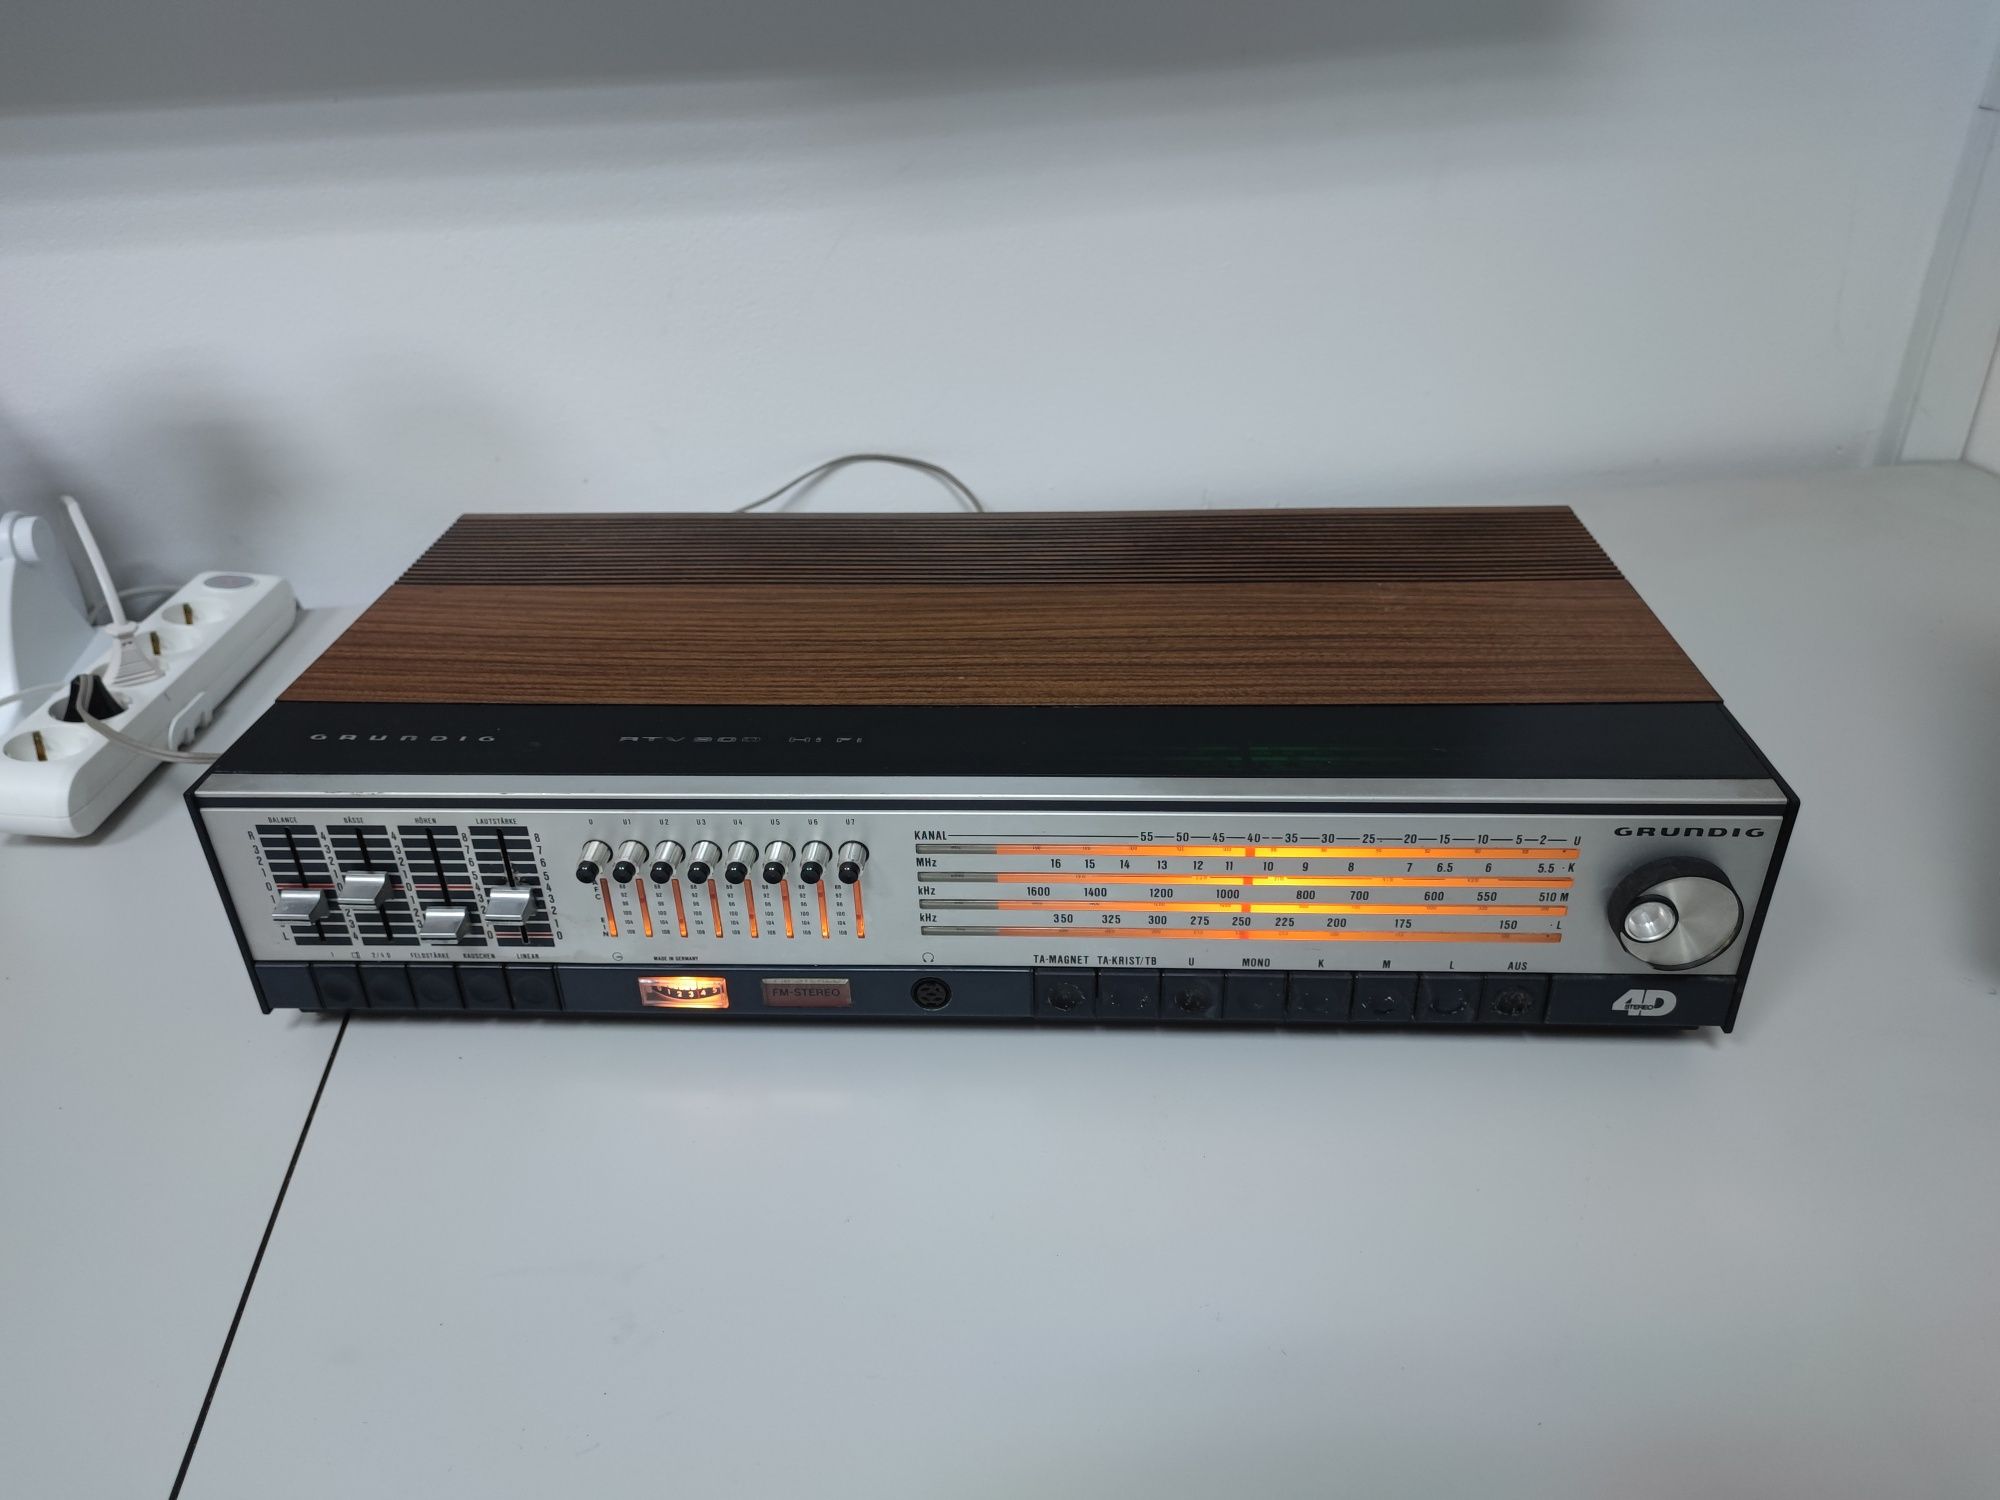 Amplituner Radio Grunding RTV 900 HiFi